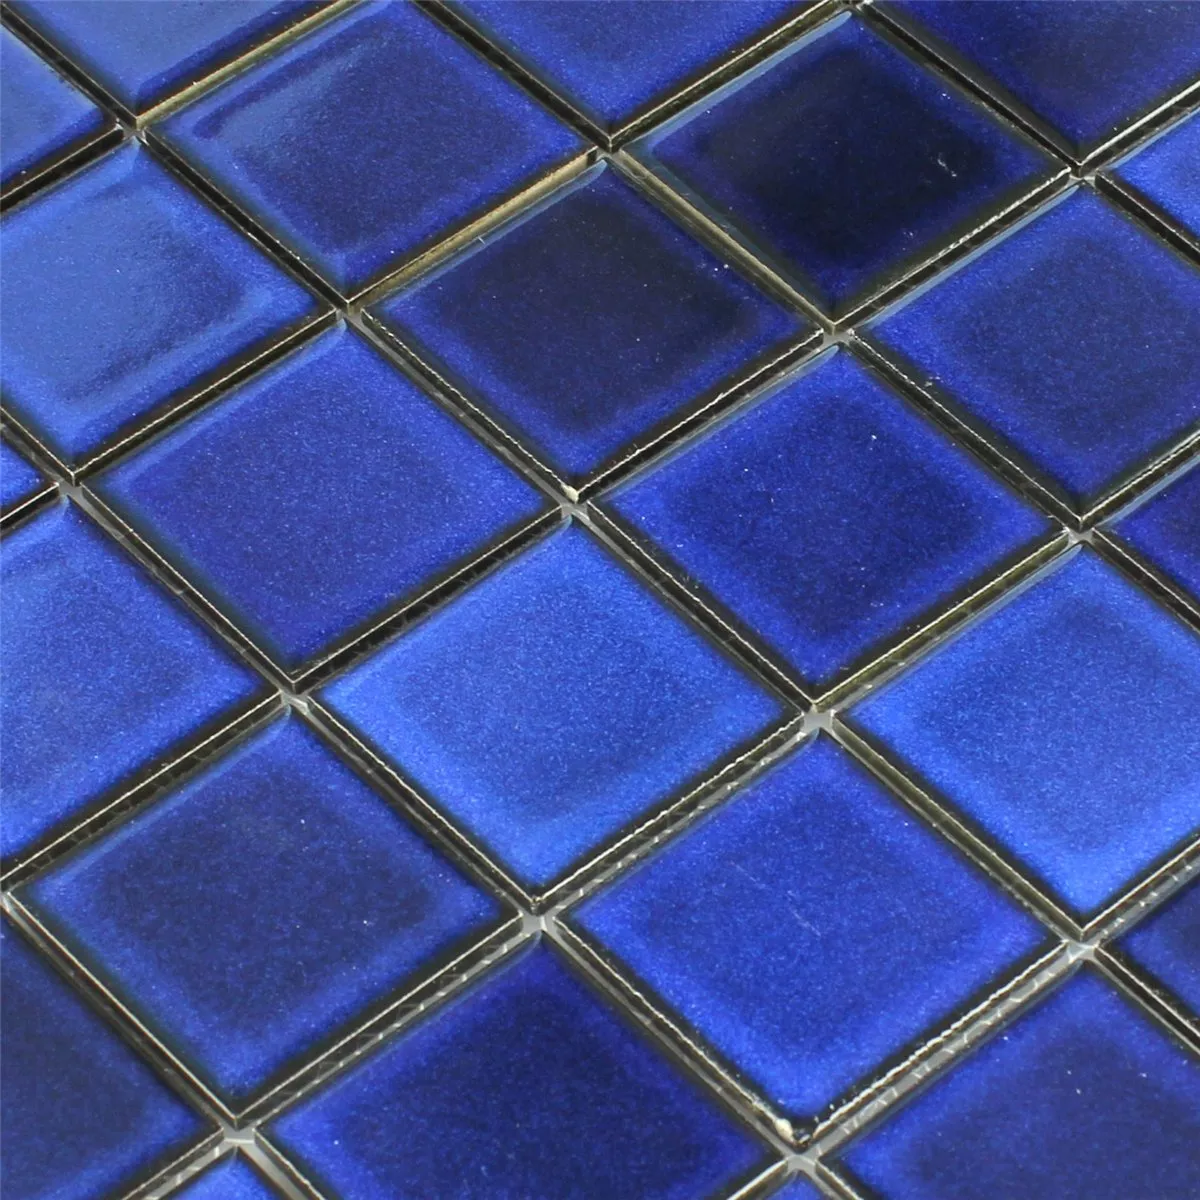 Campione Mosaico Specchio Di Ceramica Blu Uni